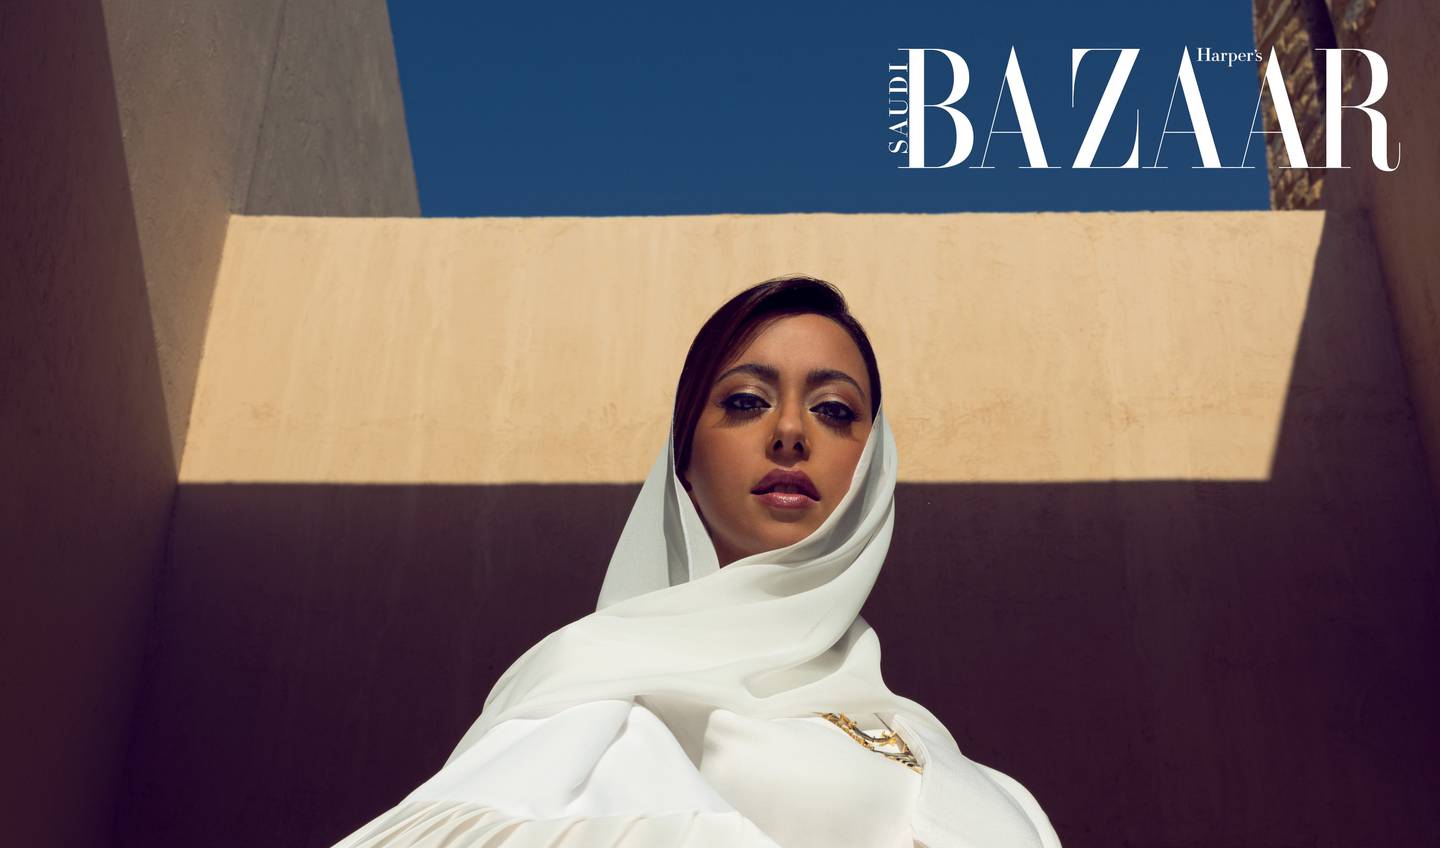 Harper's Bazaar is launching in Saudi Arabia. ITP Media Group